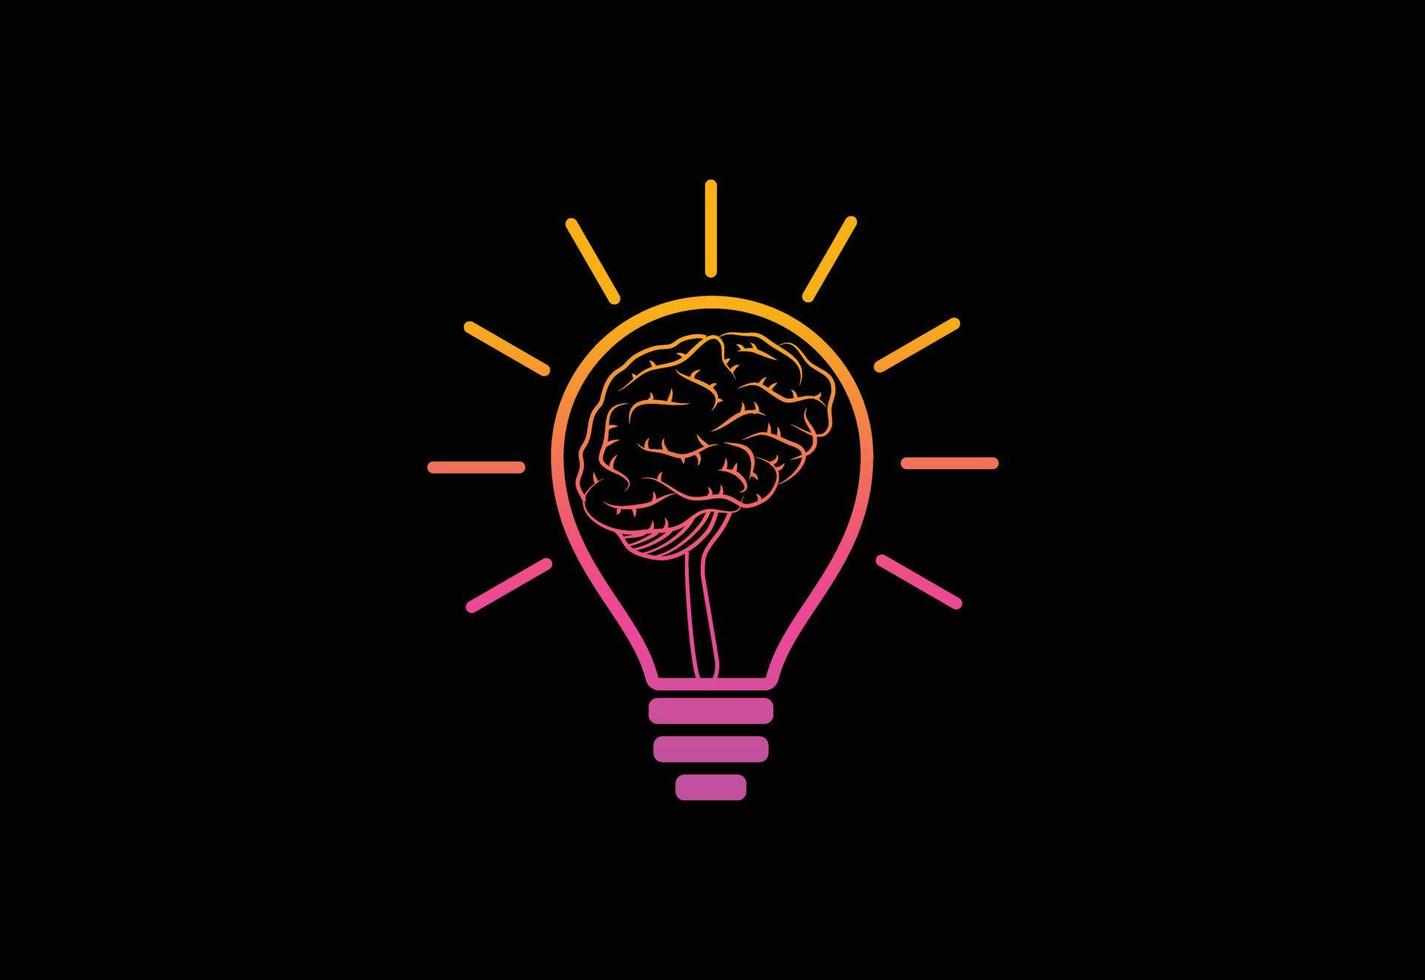 Modern and simple logo design for a brain, Brain logo icon sign symbol. vector